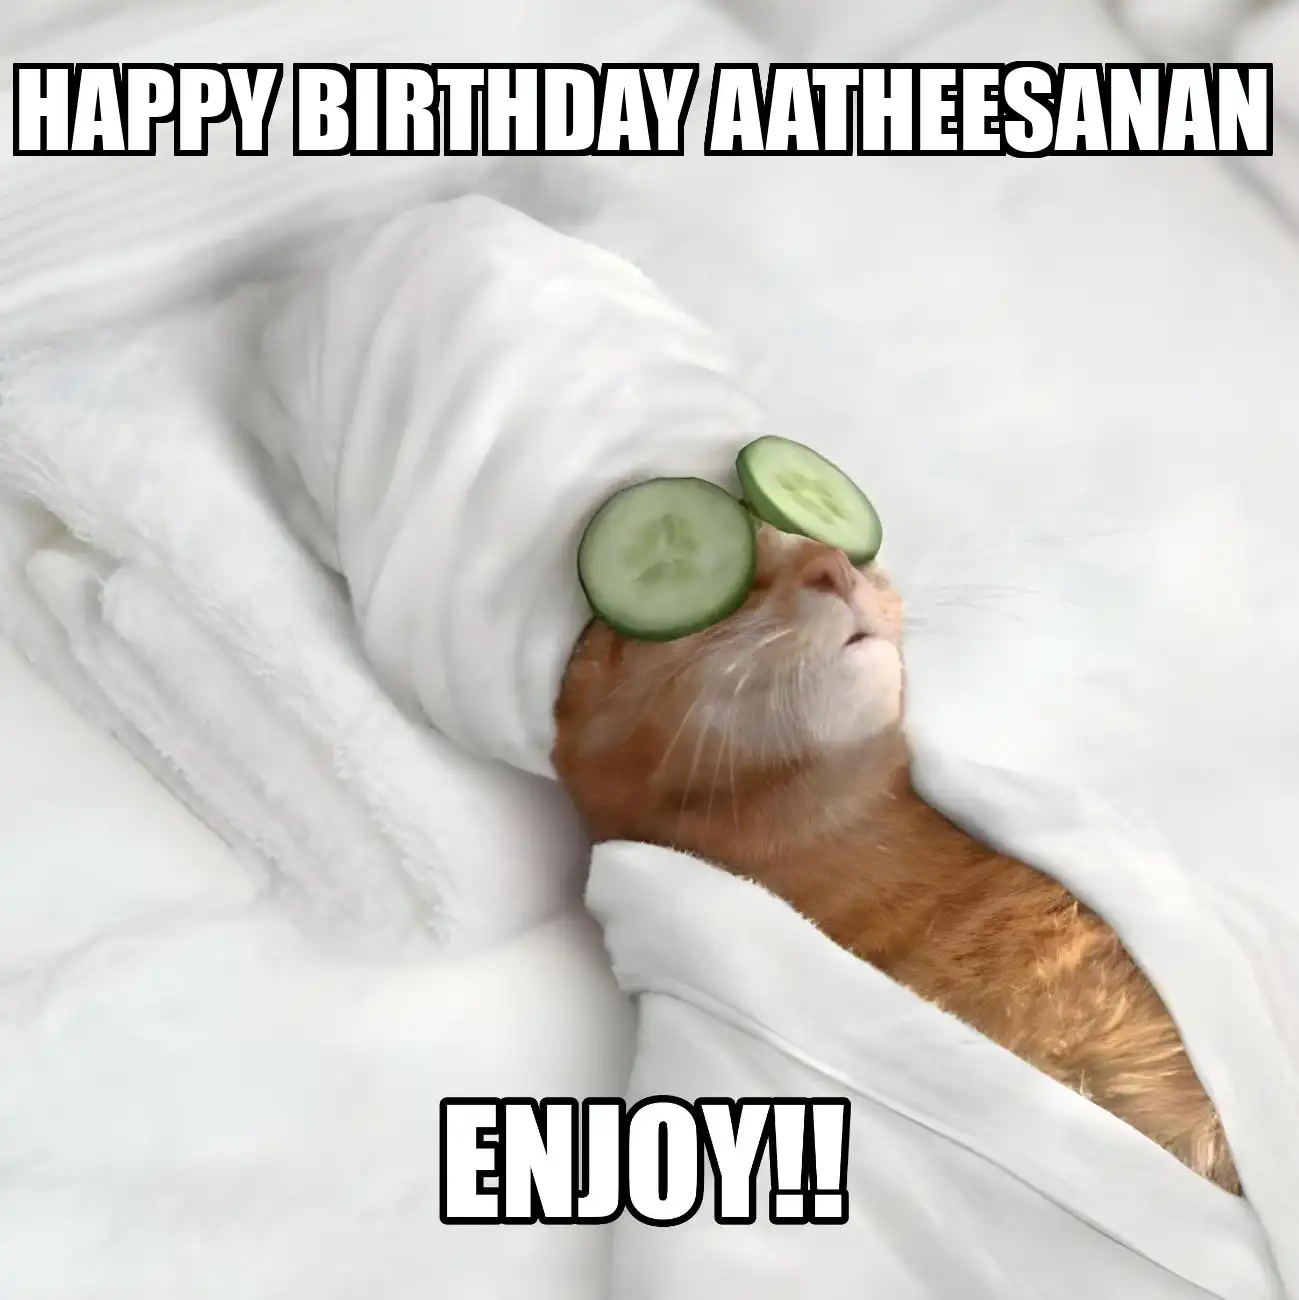 Happy Birthday Aatheesanan Enjoy Cat Meme